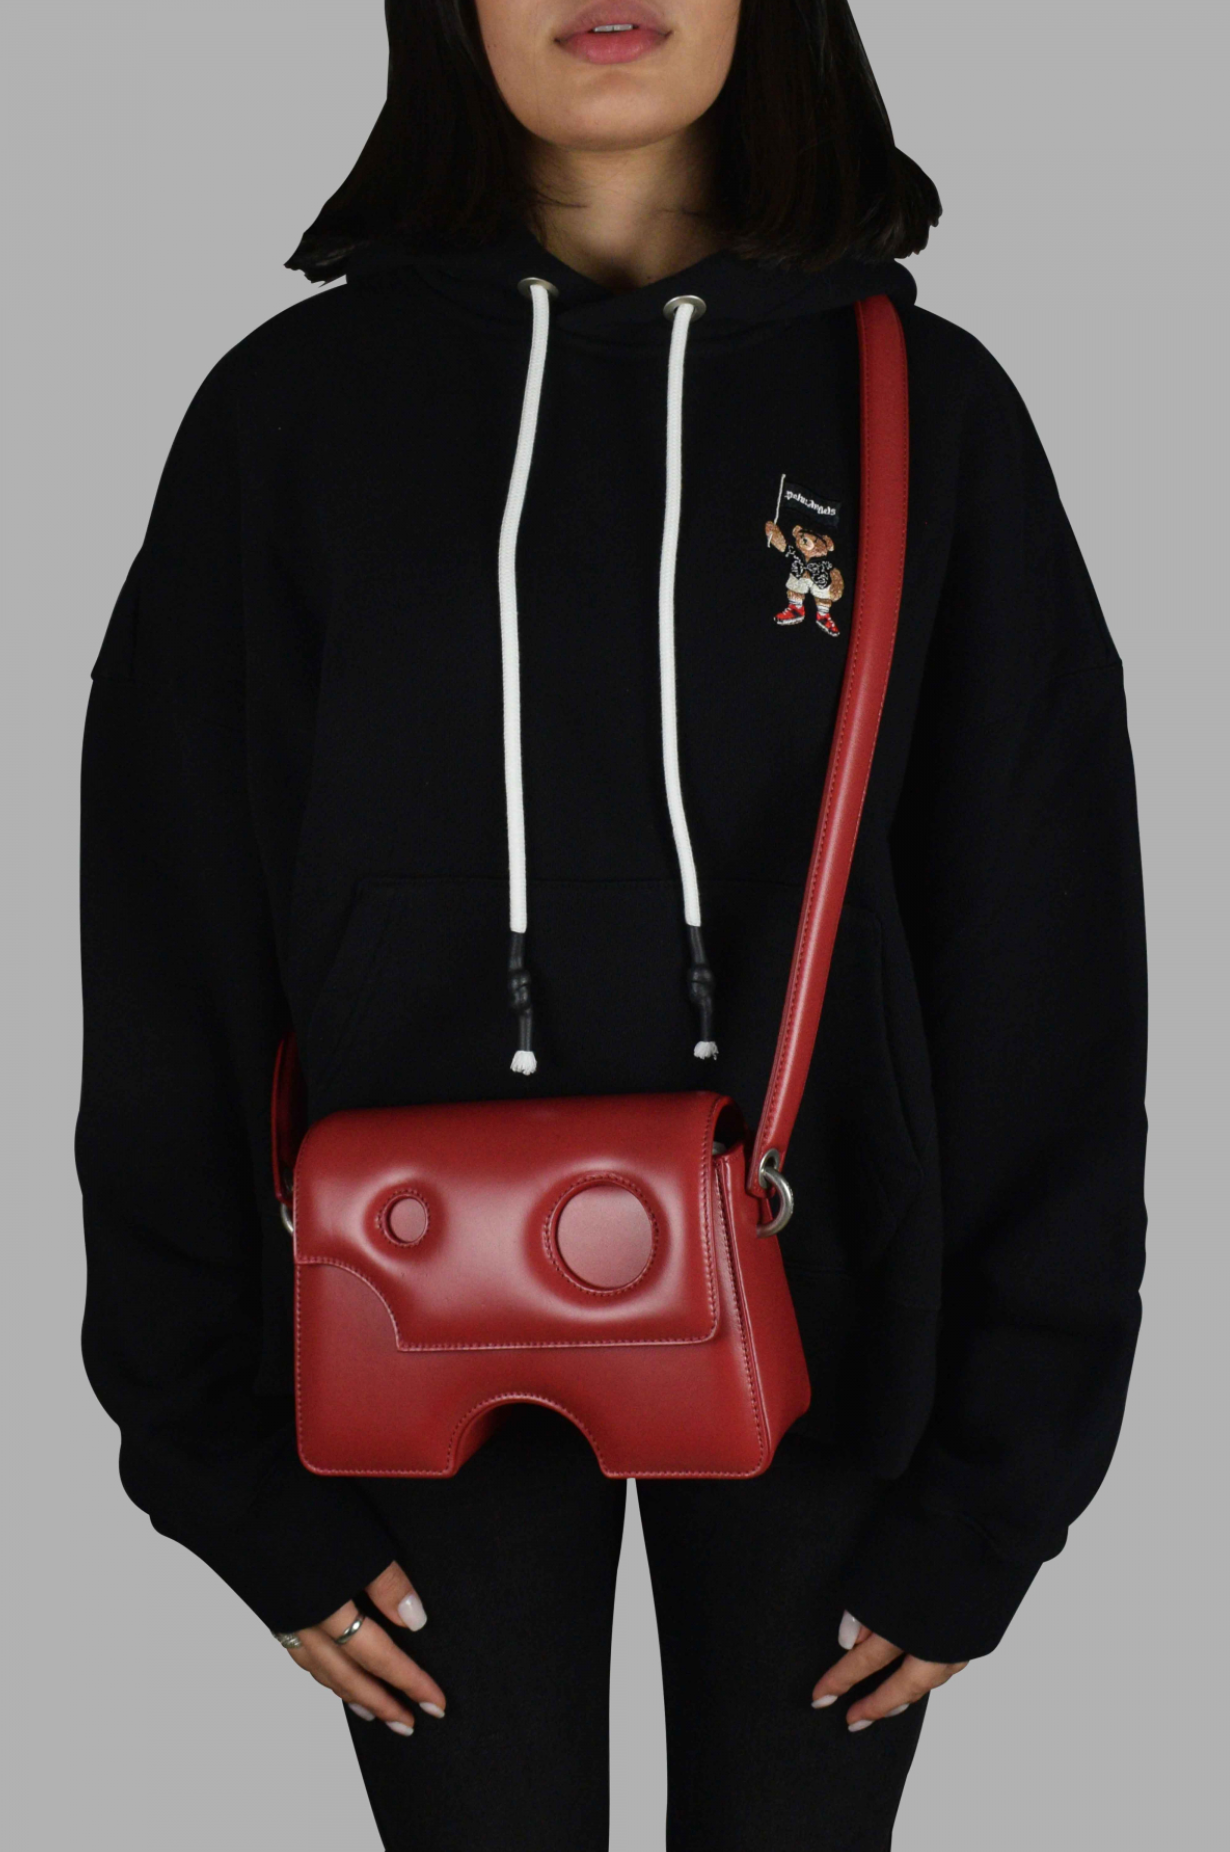 Chic Red Leather Crossbody Bag - Italian Elegance